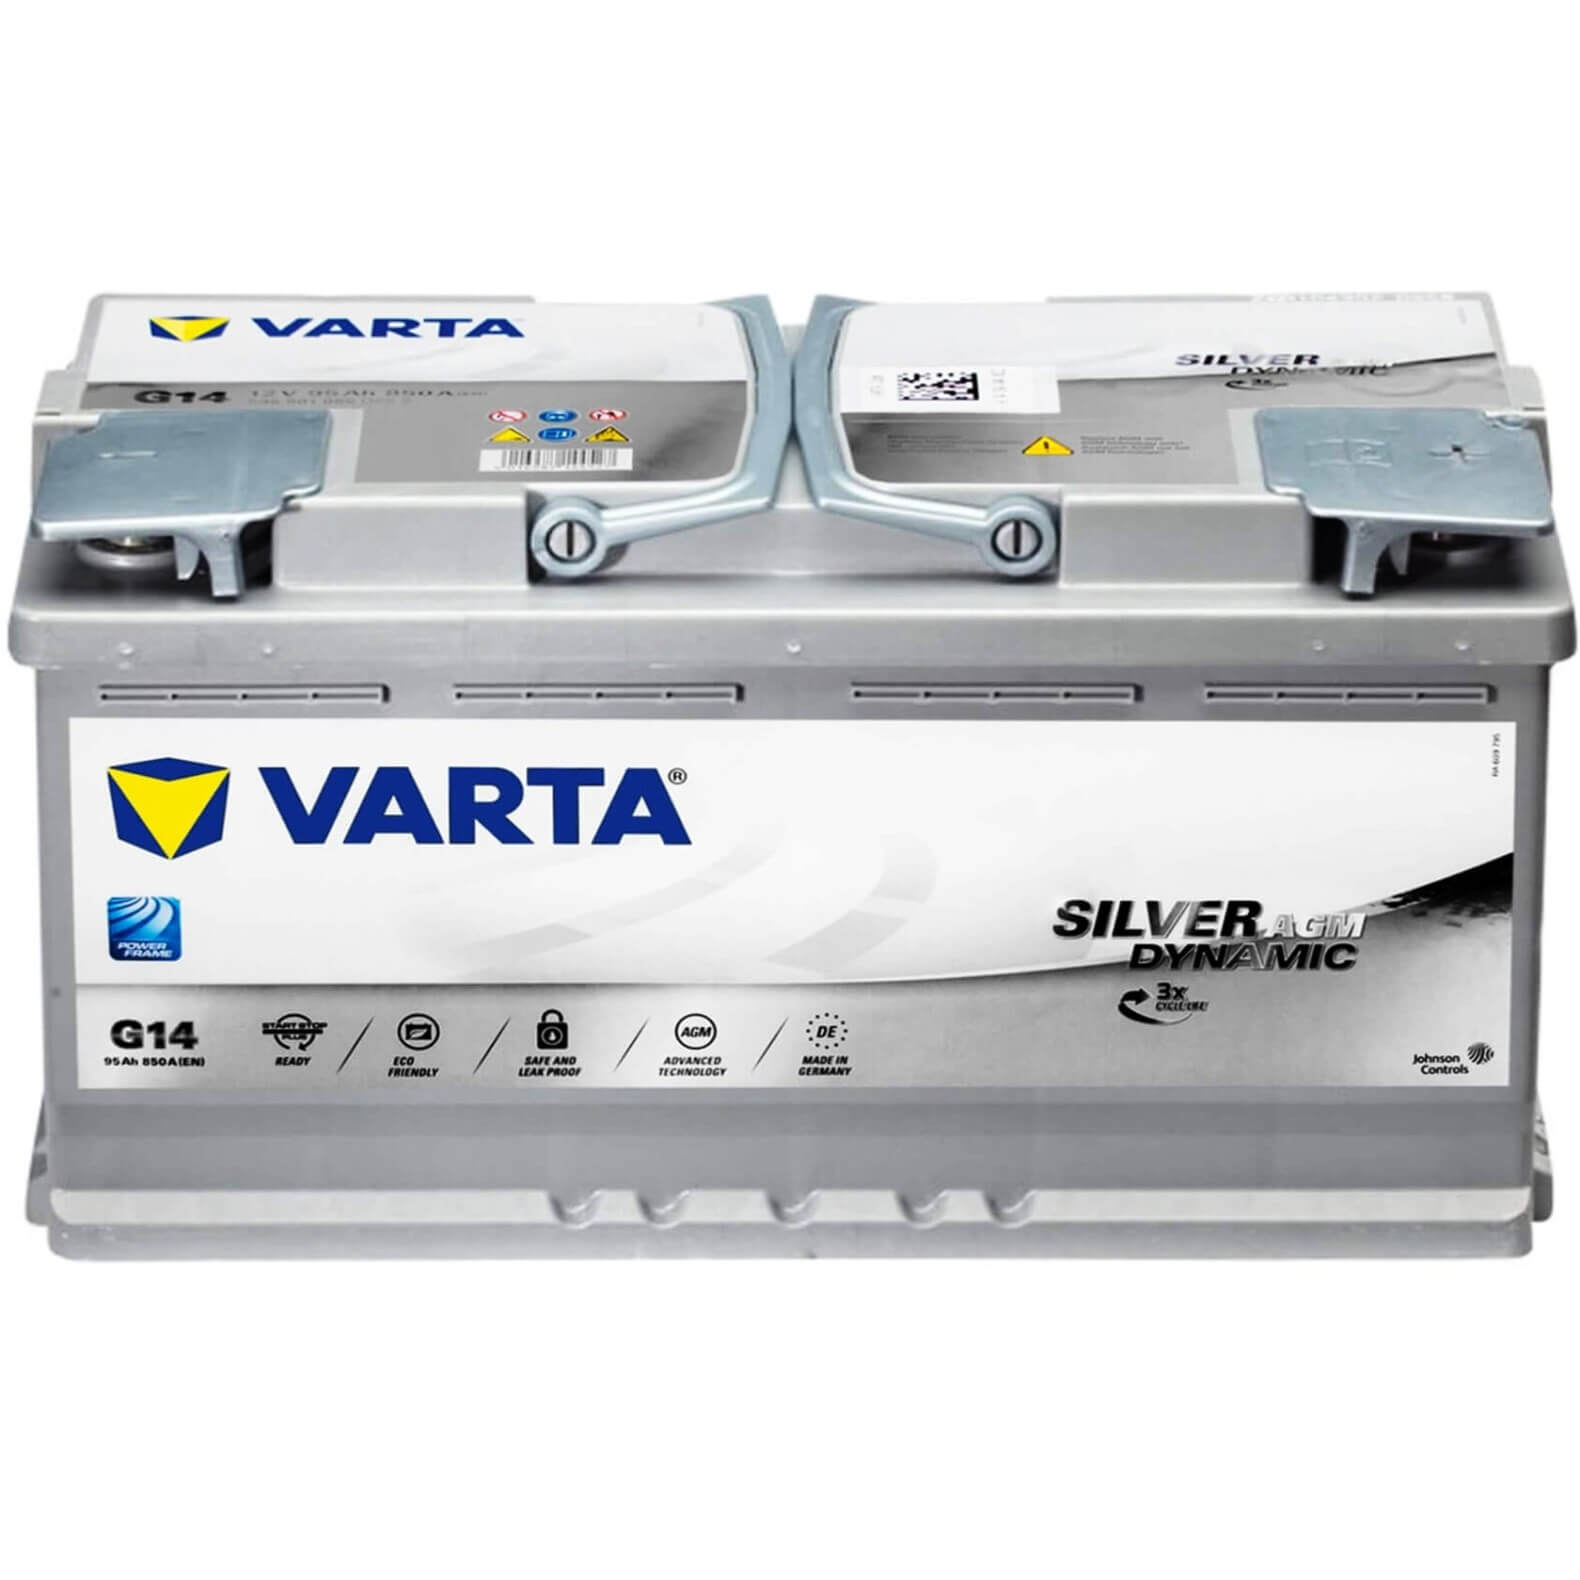 595901085D852 VARTA G14 SILVER dynamic G14 Batterie 12V 95Ah 850A